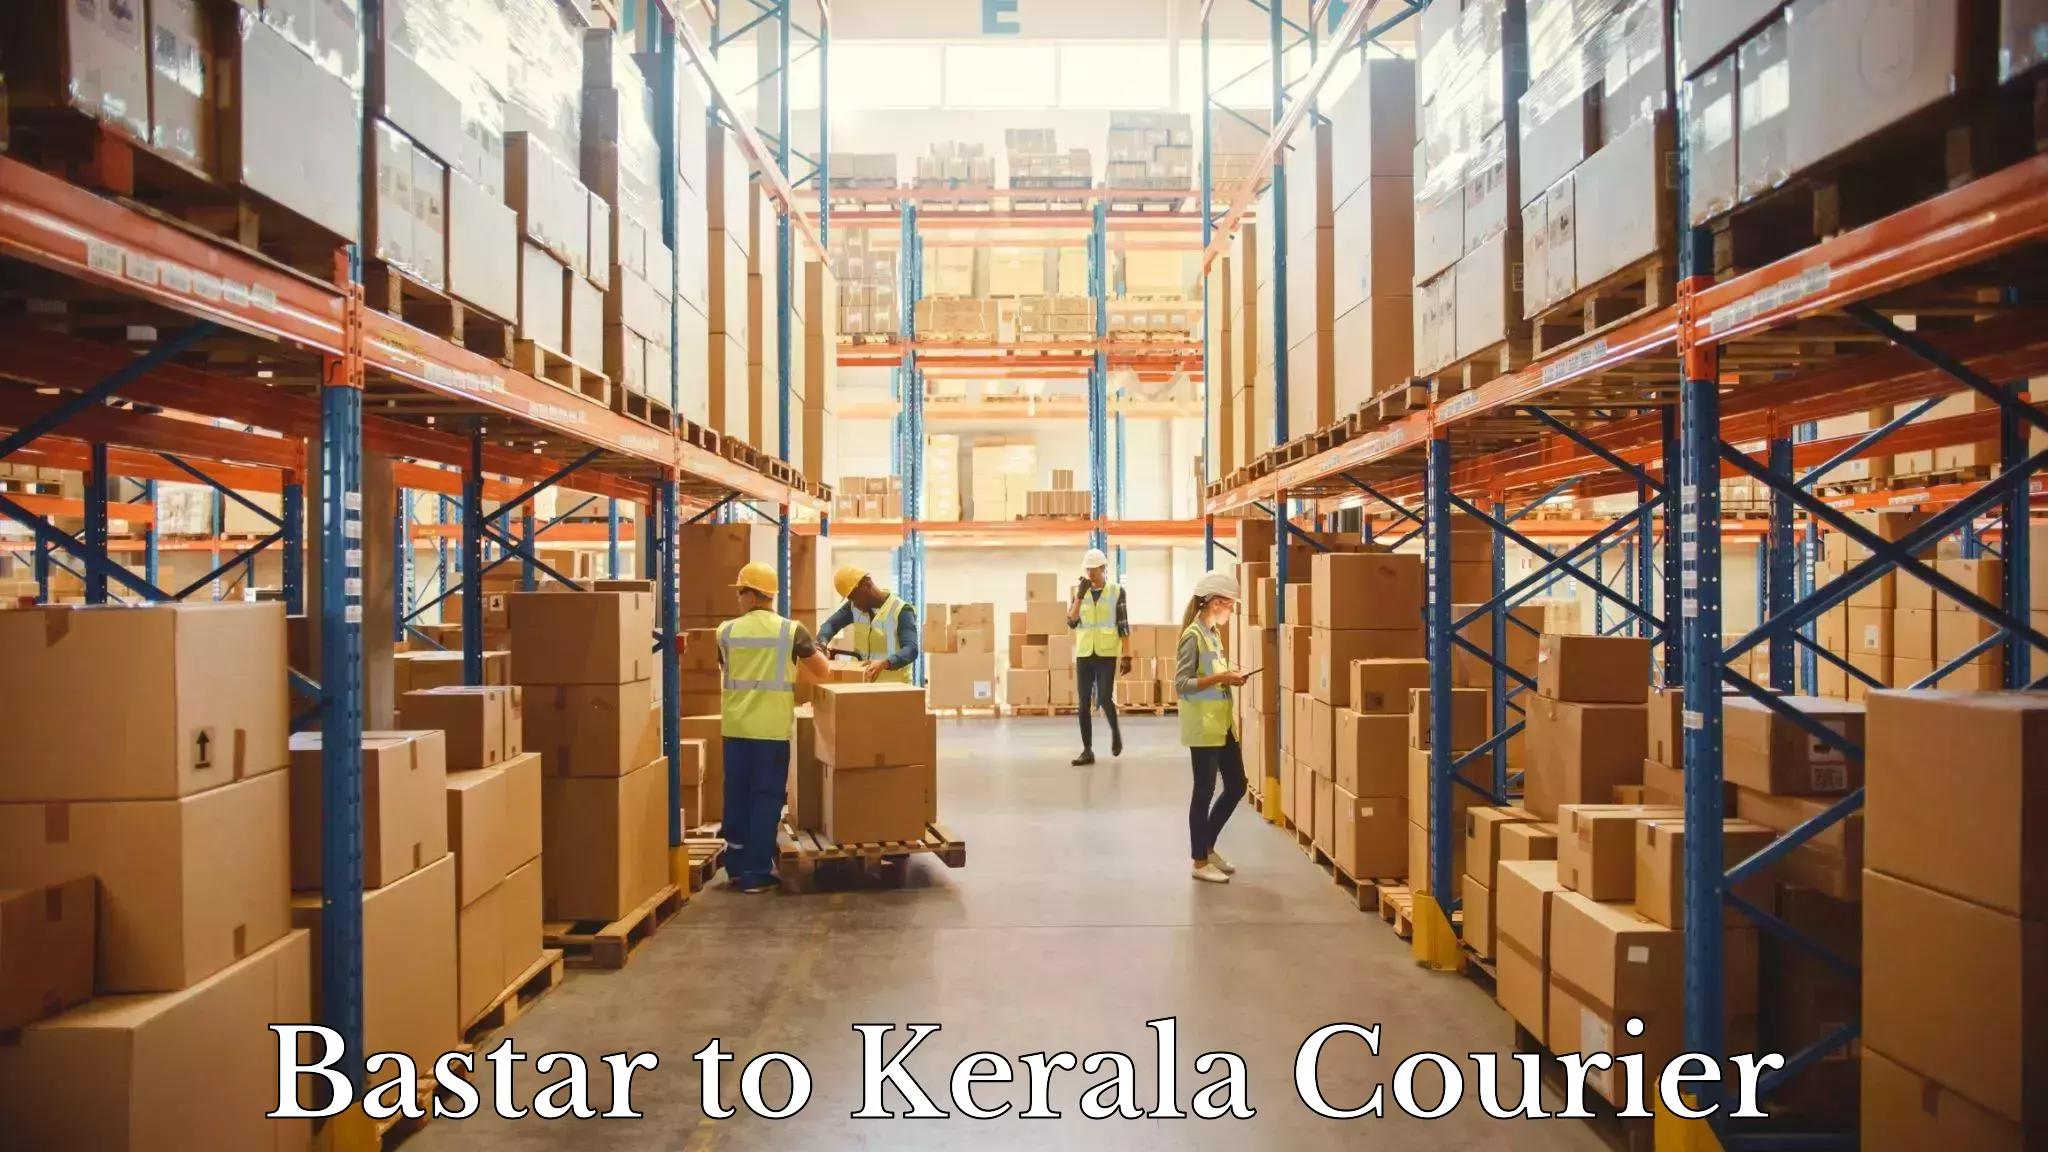 Courier app Bastar to Kerala